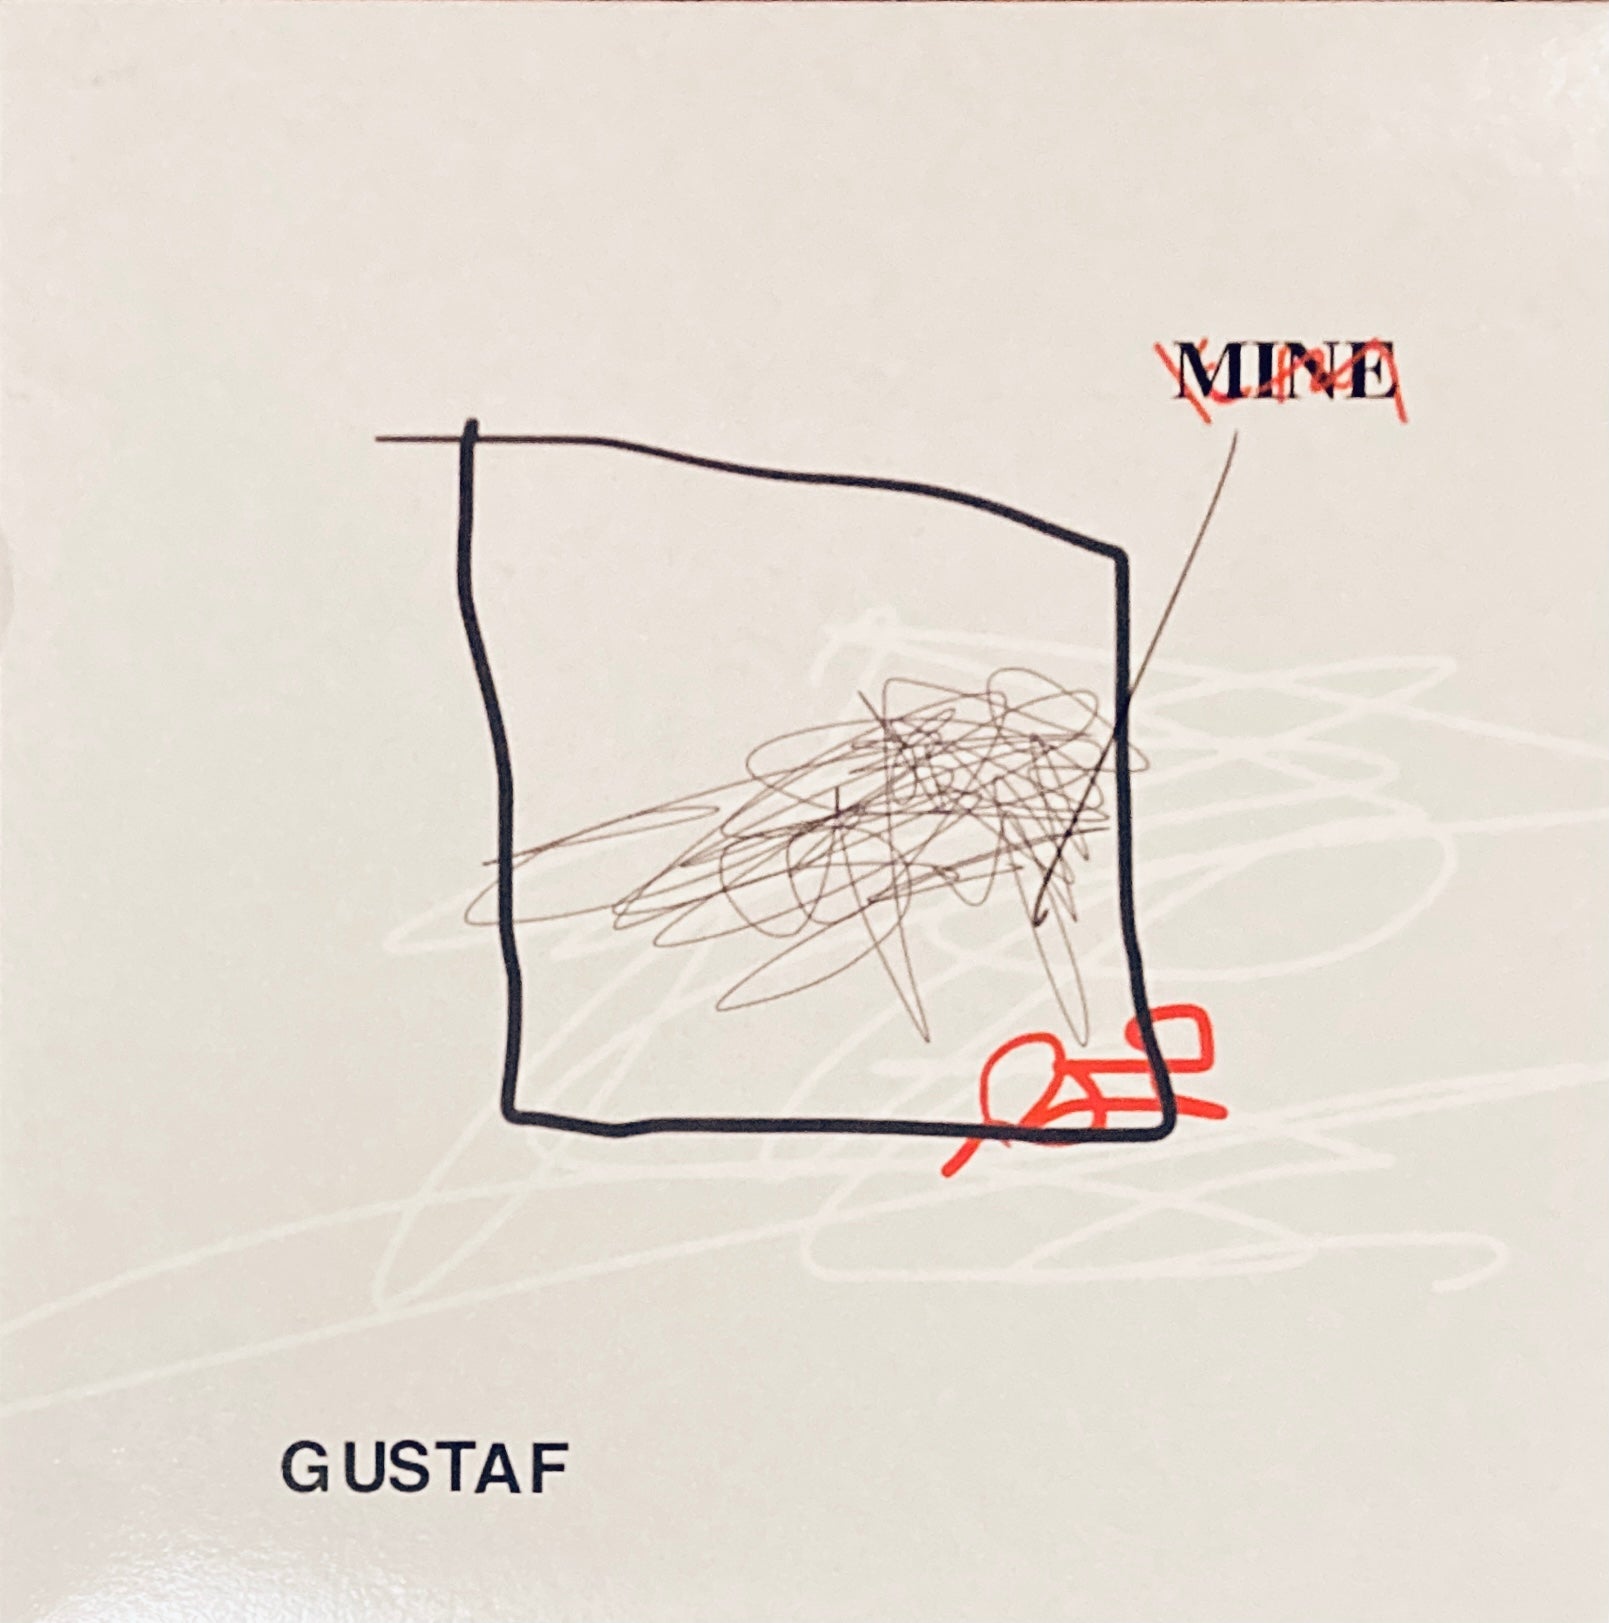 GUSTAF “Mine” Red Single (2021)